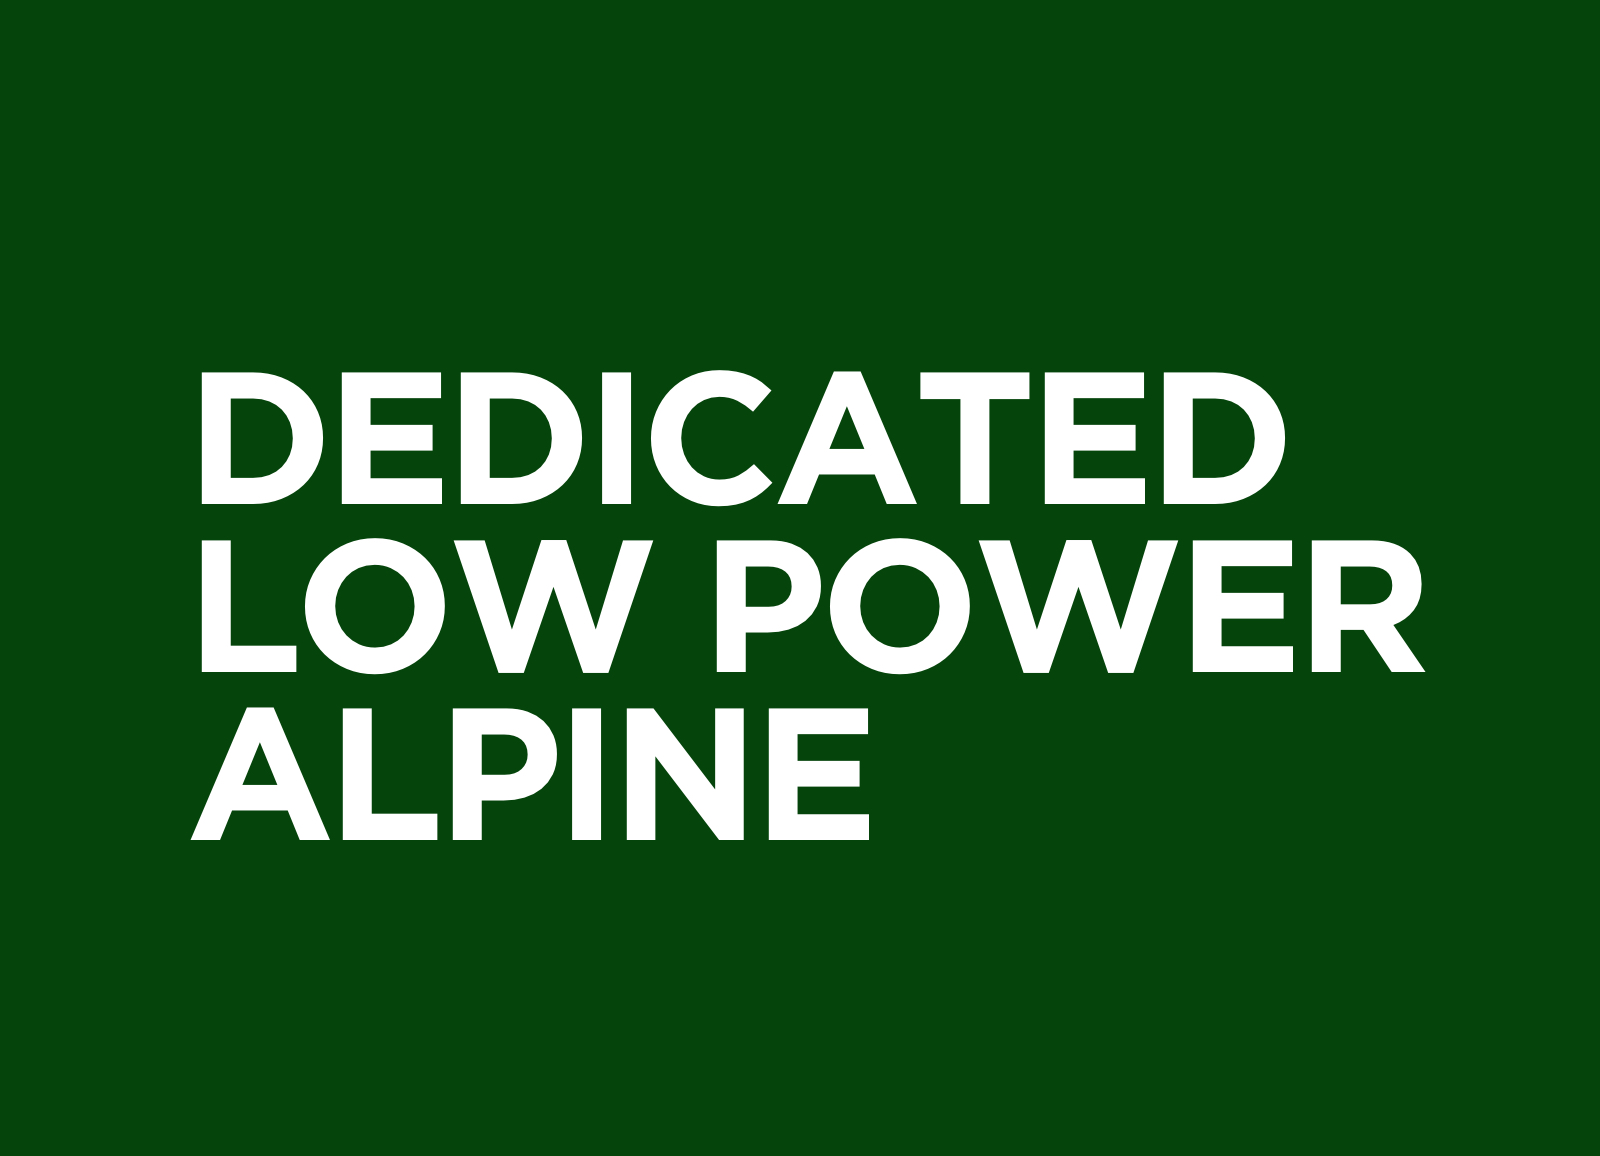 Dedicated Low Power Alpine